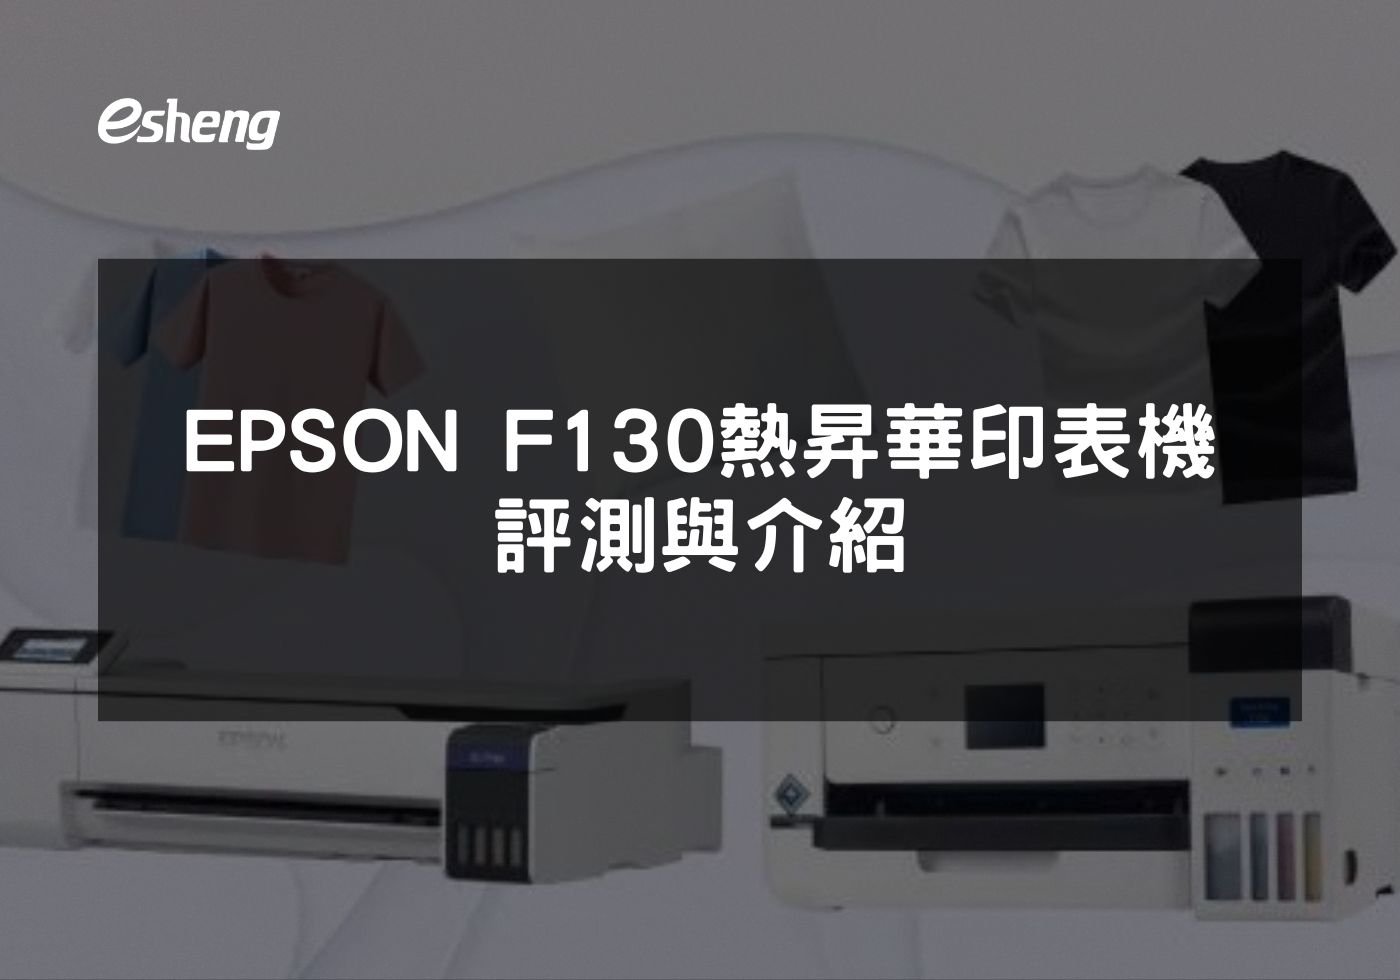 EPSON F130 熱昇華印表機評測與介紹